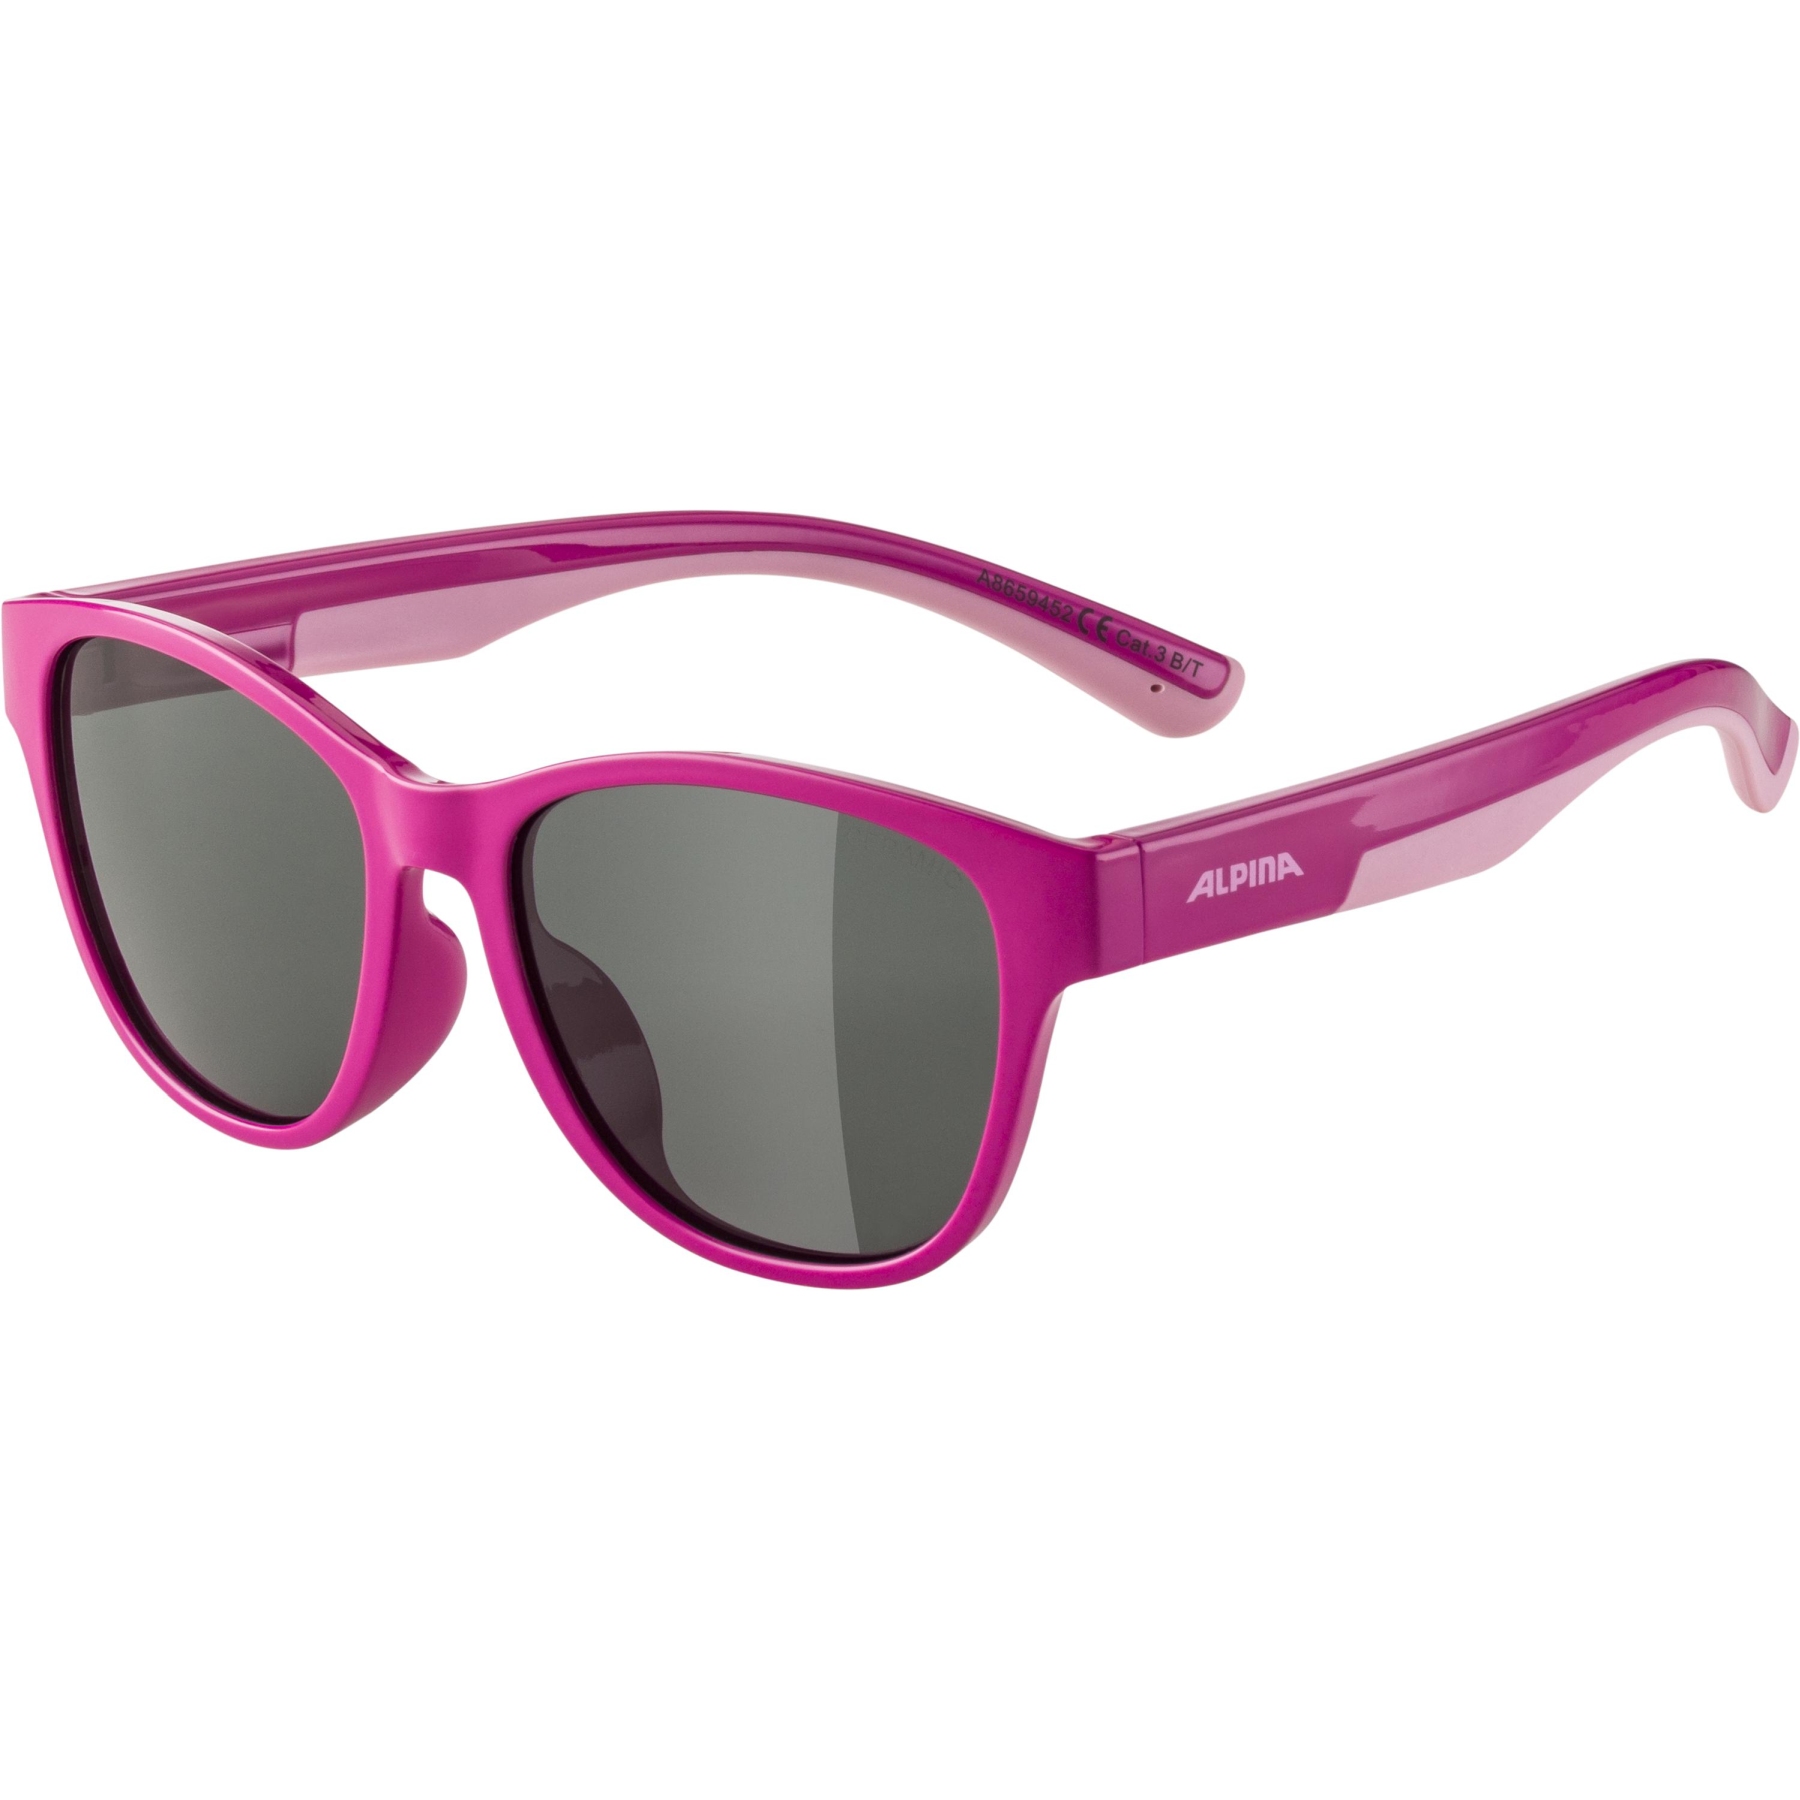 Productfoto van Alpina Flexxy Cool Kids II Glasses - pink-rose / black